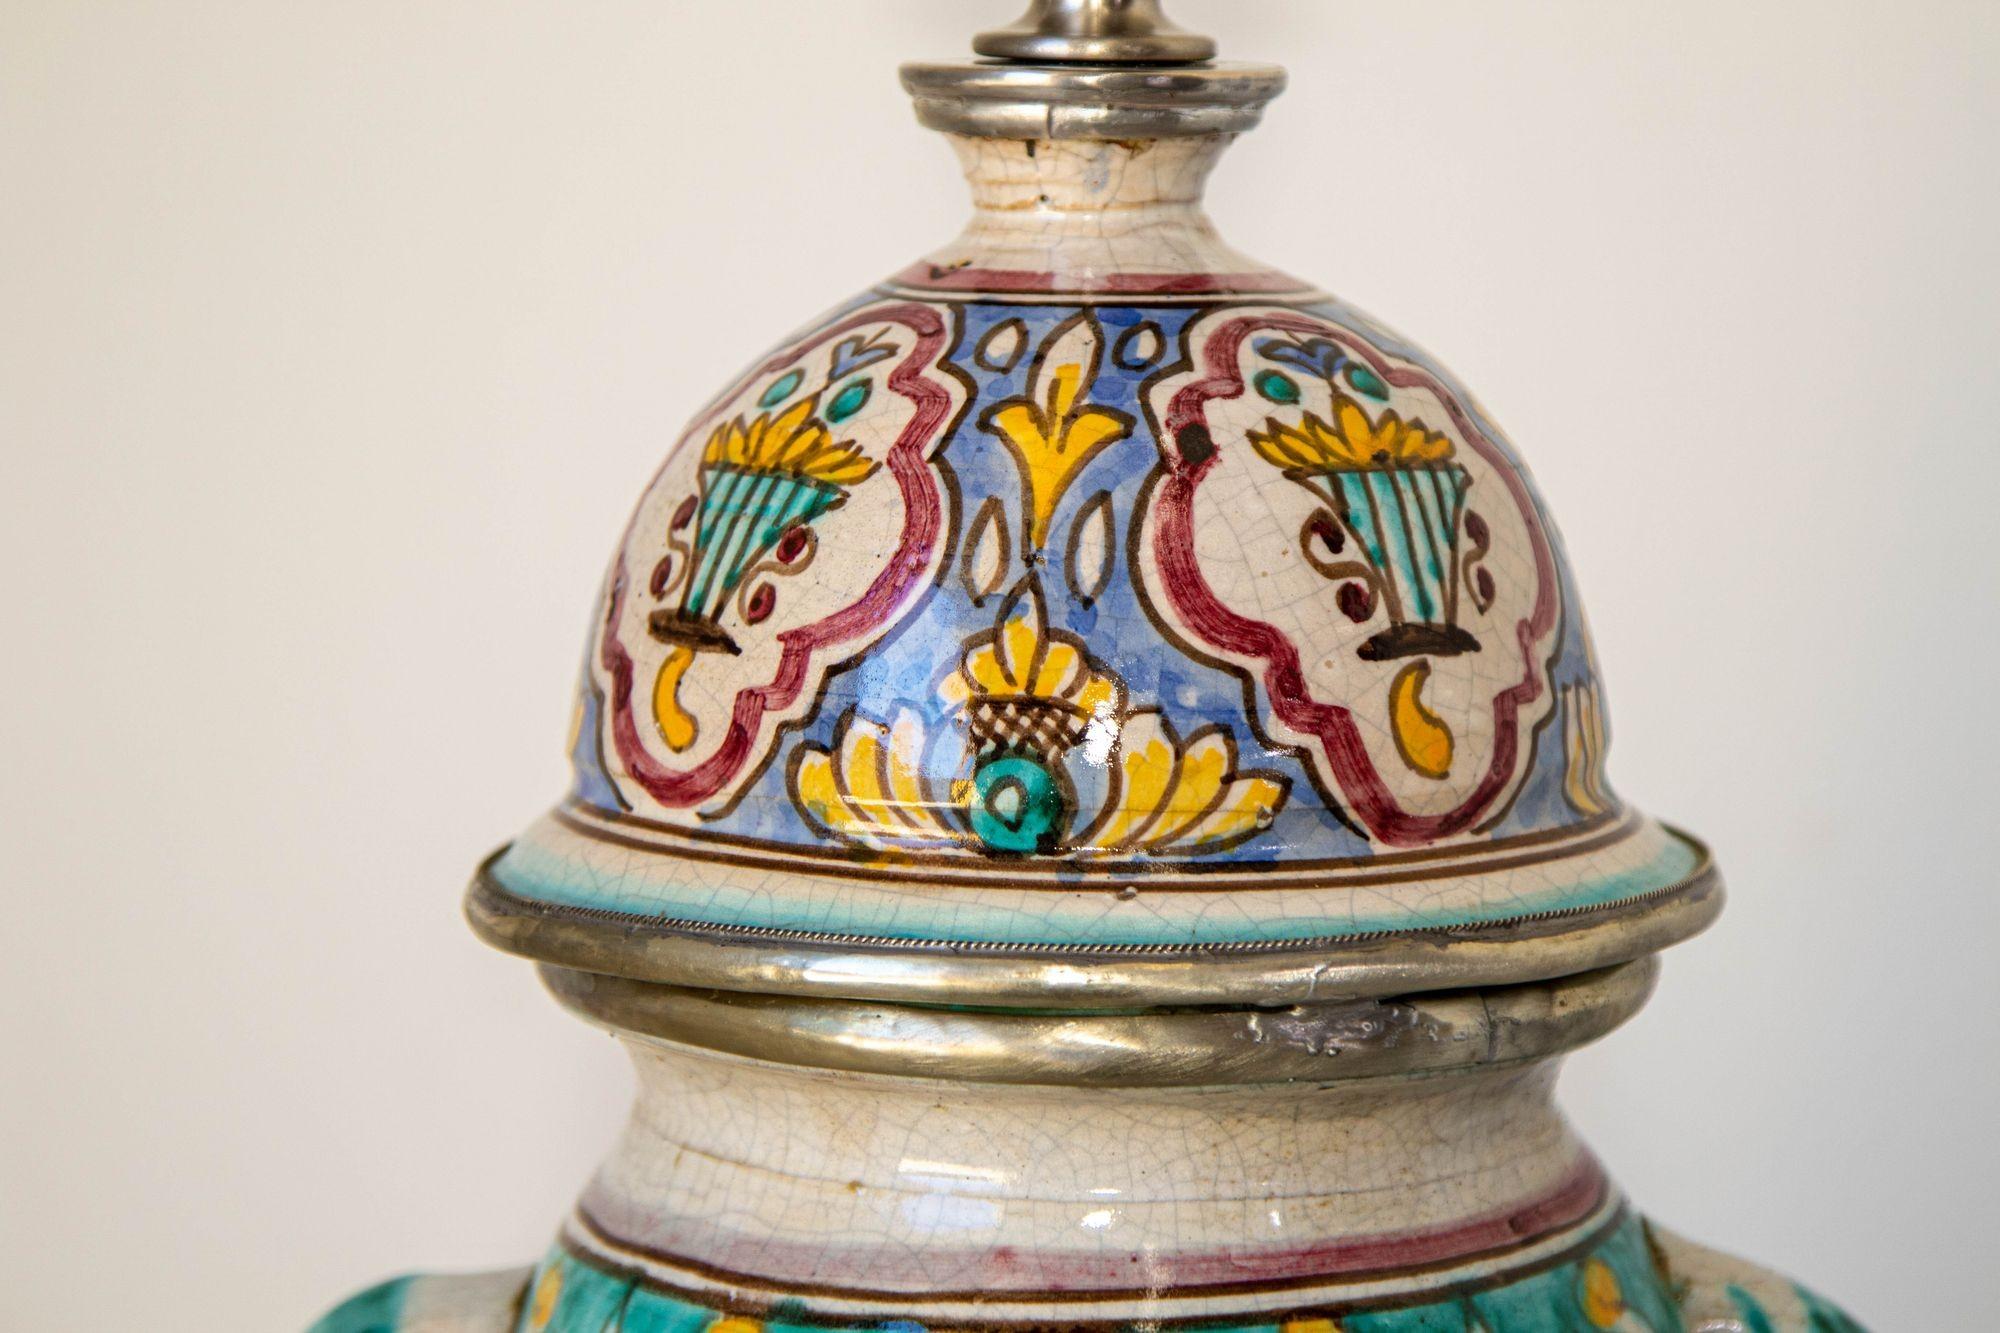 Moroccan Moorish Ceramic Table Lamp with Spanish Granada Design In Good Condition For Sale In North Hollywood, CA